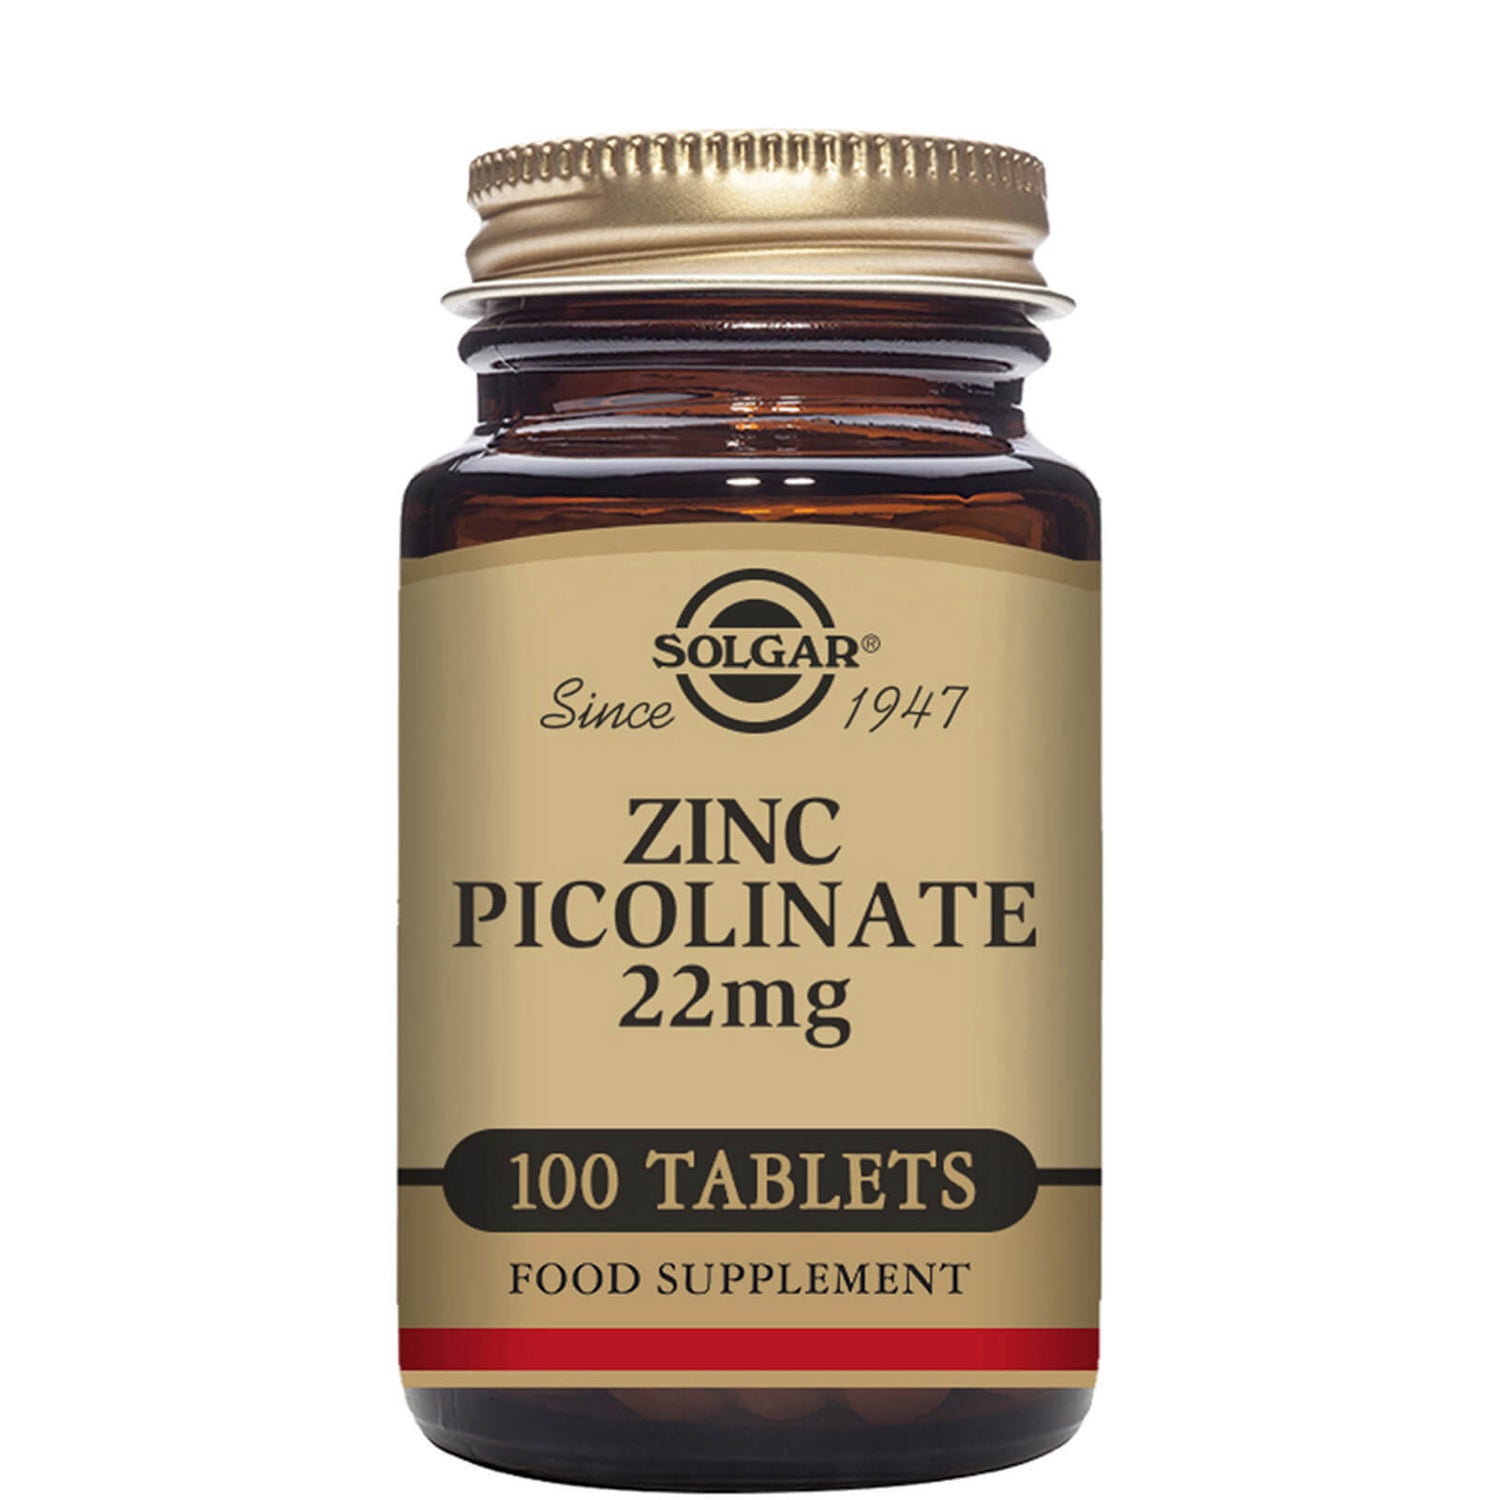 Solgar Zinc Picolinate 22mg Tablets - Pack of 100